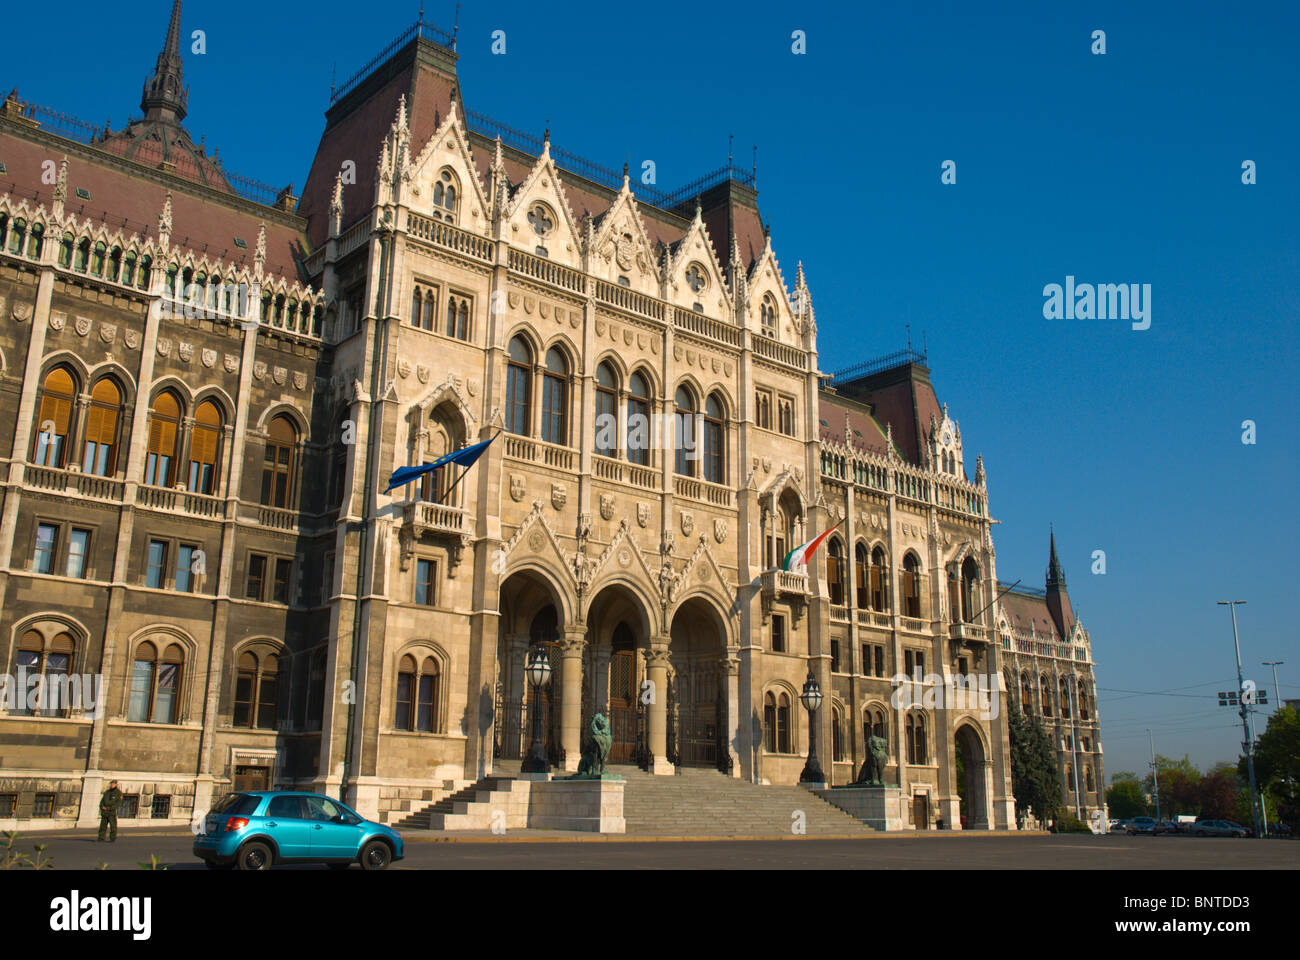 Parlament the Hungarian Parliament building Budapest Lipotvaros district Hungary Europe Stock Photo